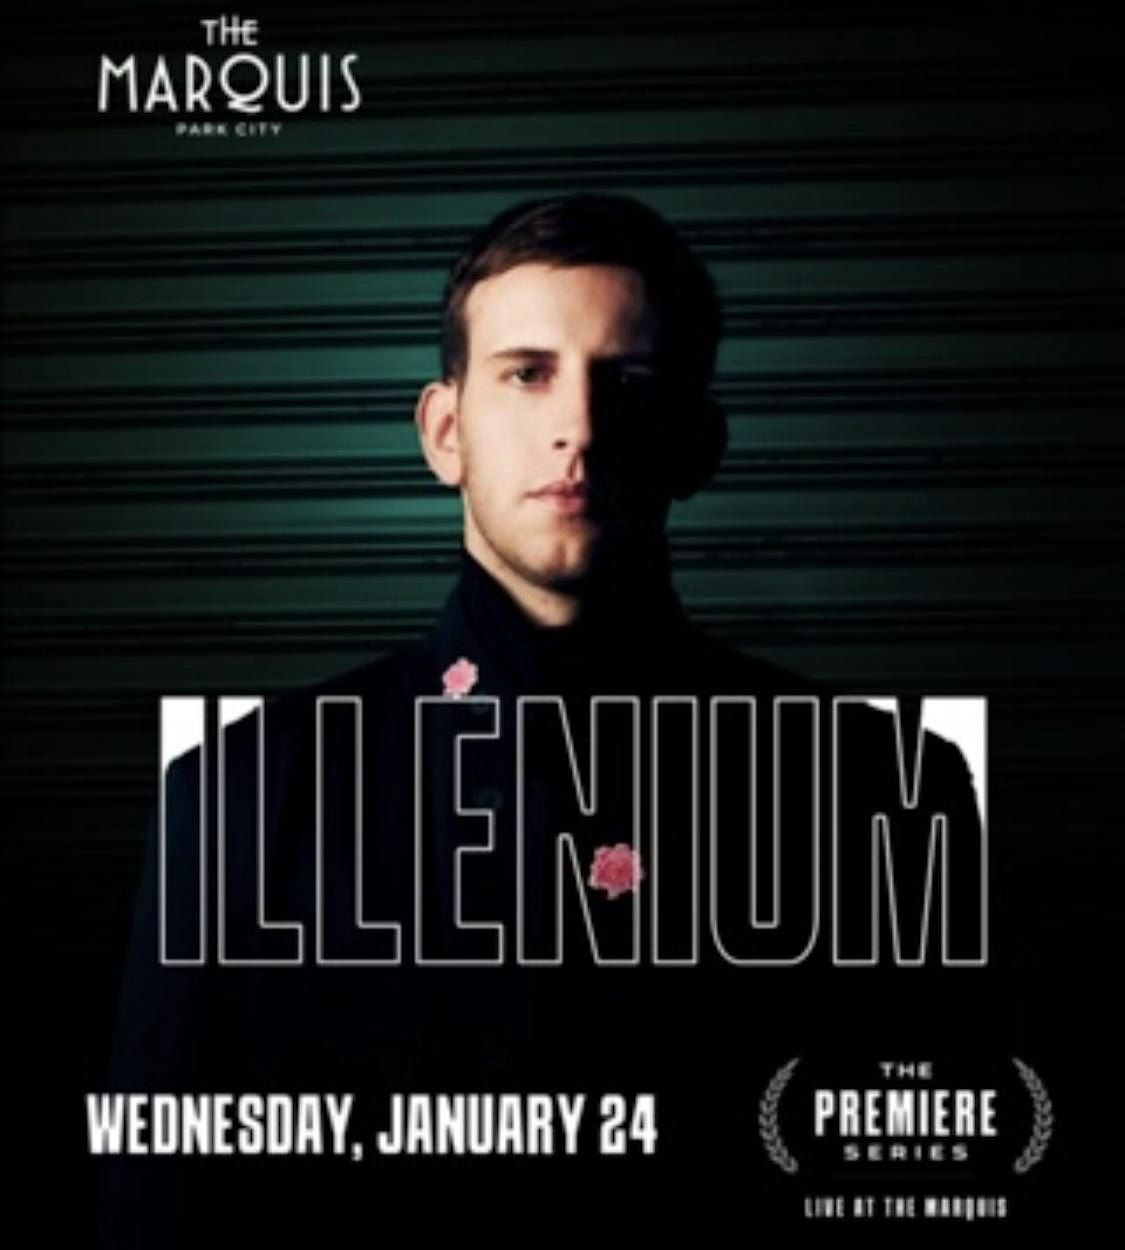 Marquis Park City for The Premiere Series brings you Illenium Live .